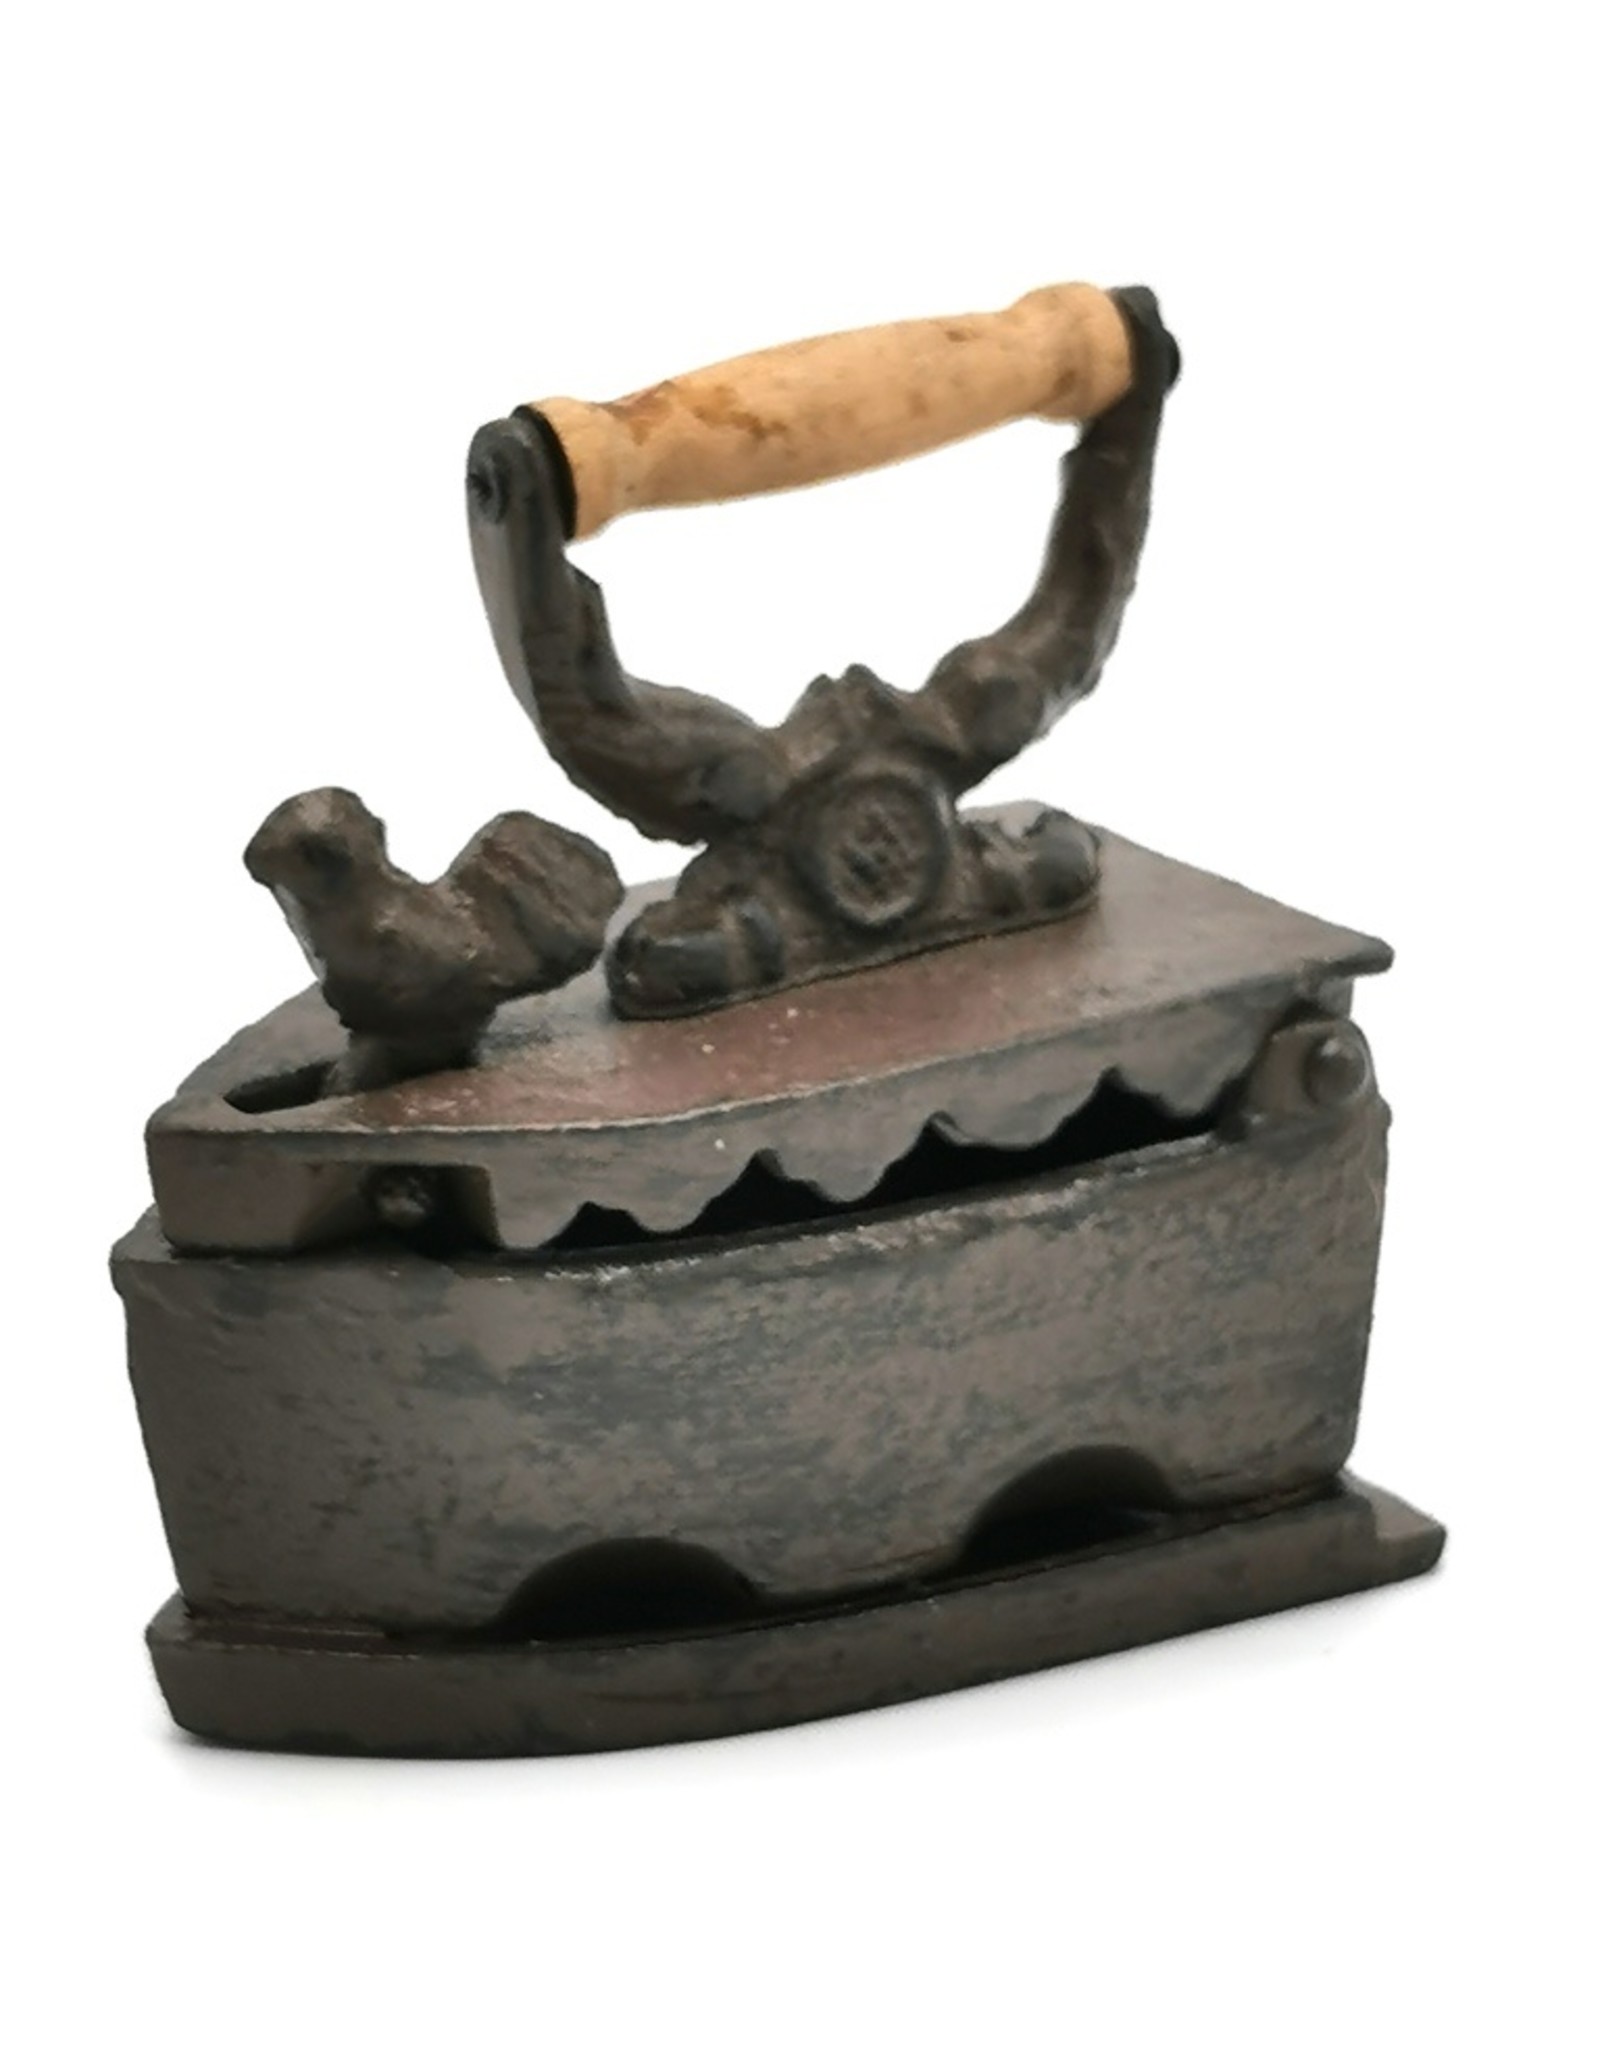 Trukado Miscellaneous - Miniature Vintage Coal Iron - Cast Iron - Cast Iron